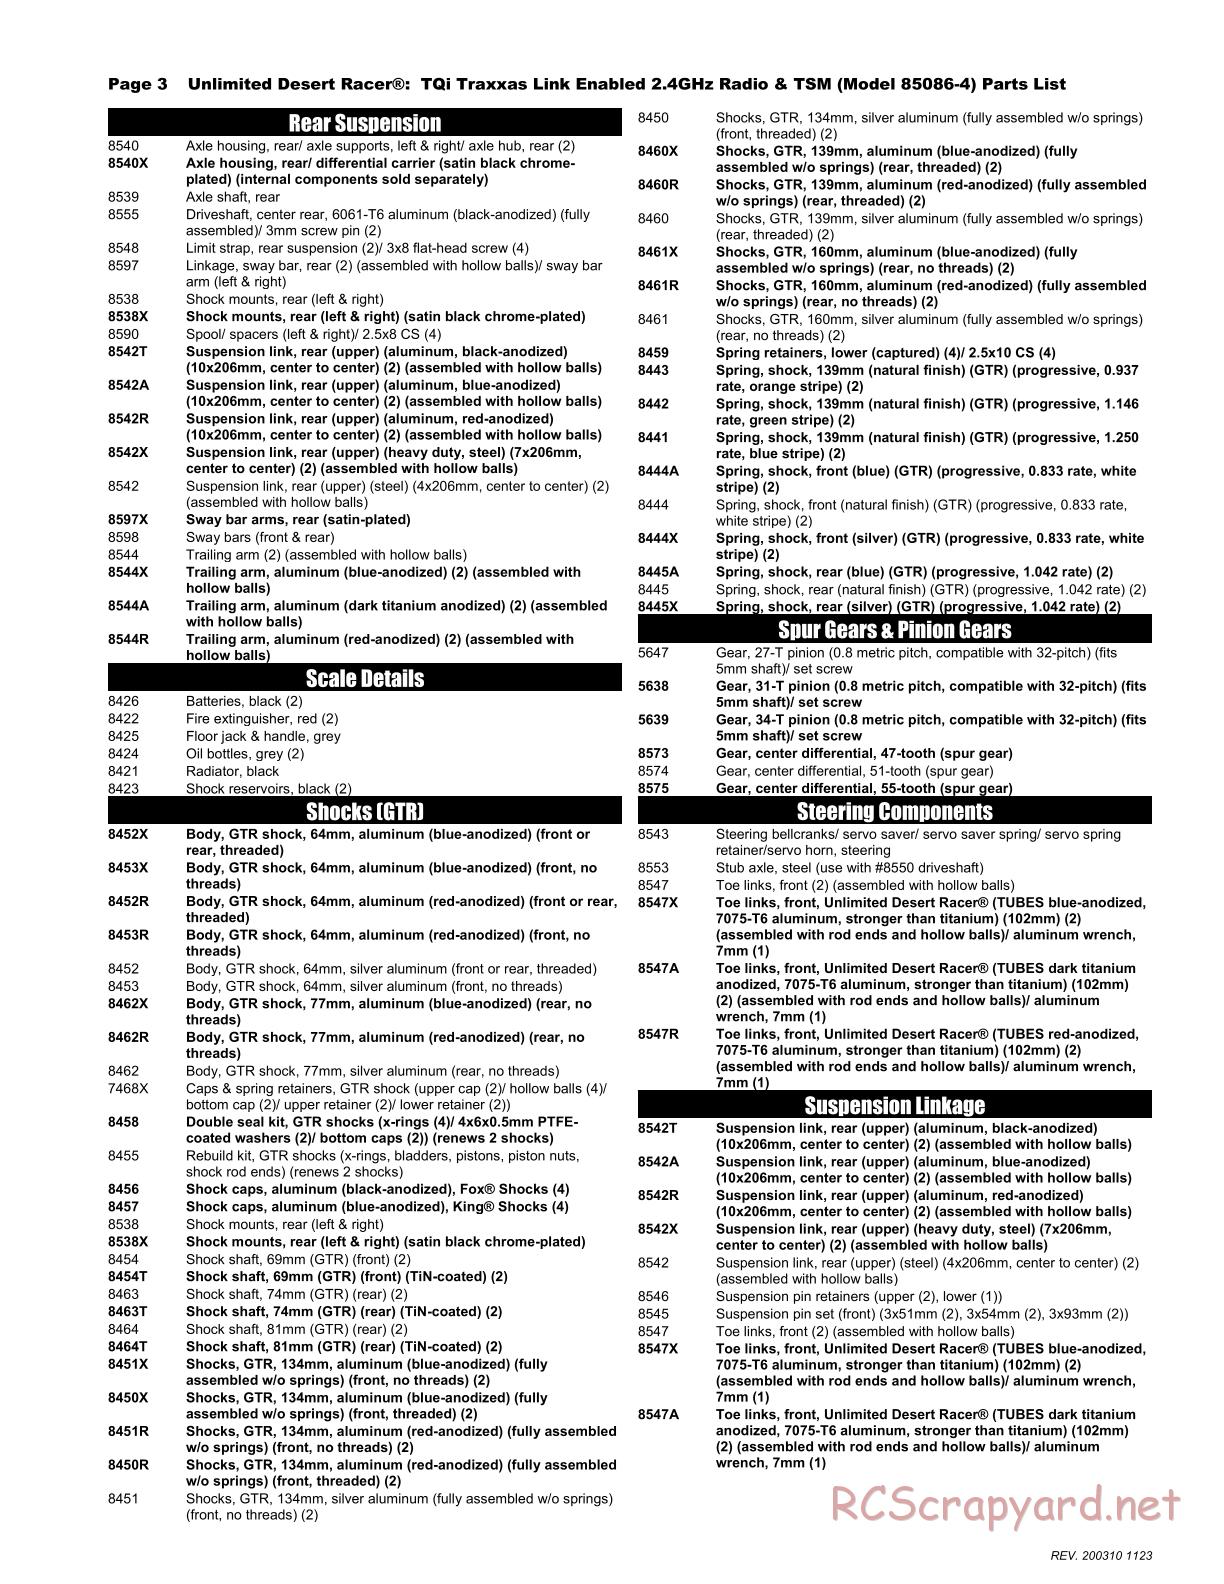 Traxxas - Unlimited Desert Racer VXL TSM - Parts List - Page 3